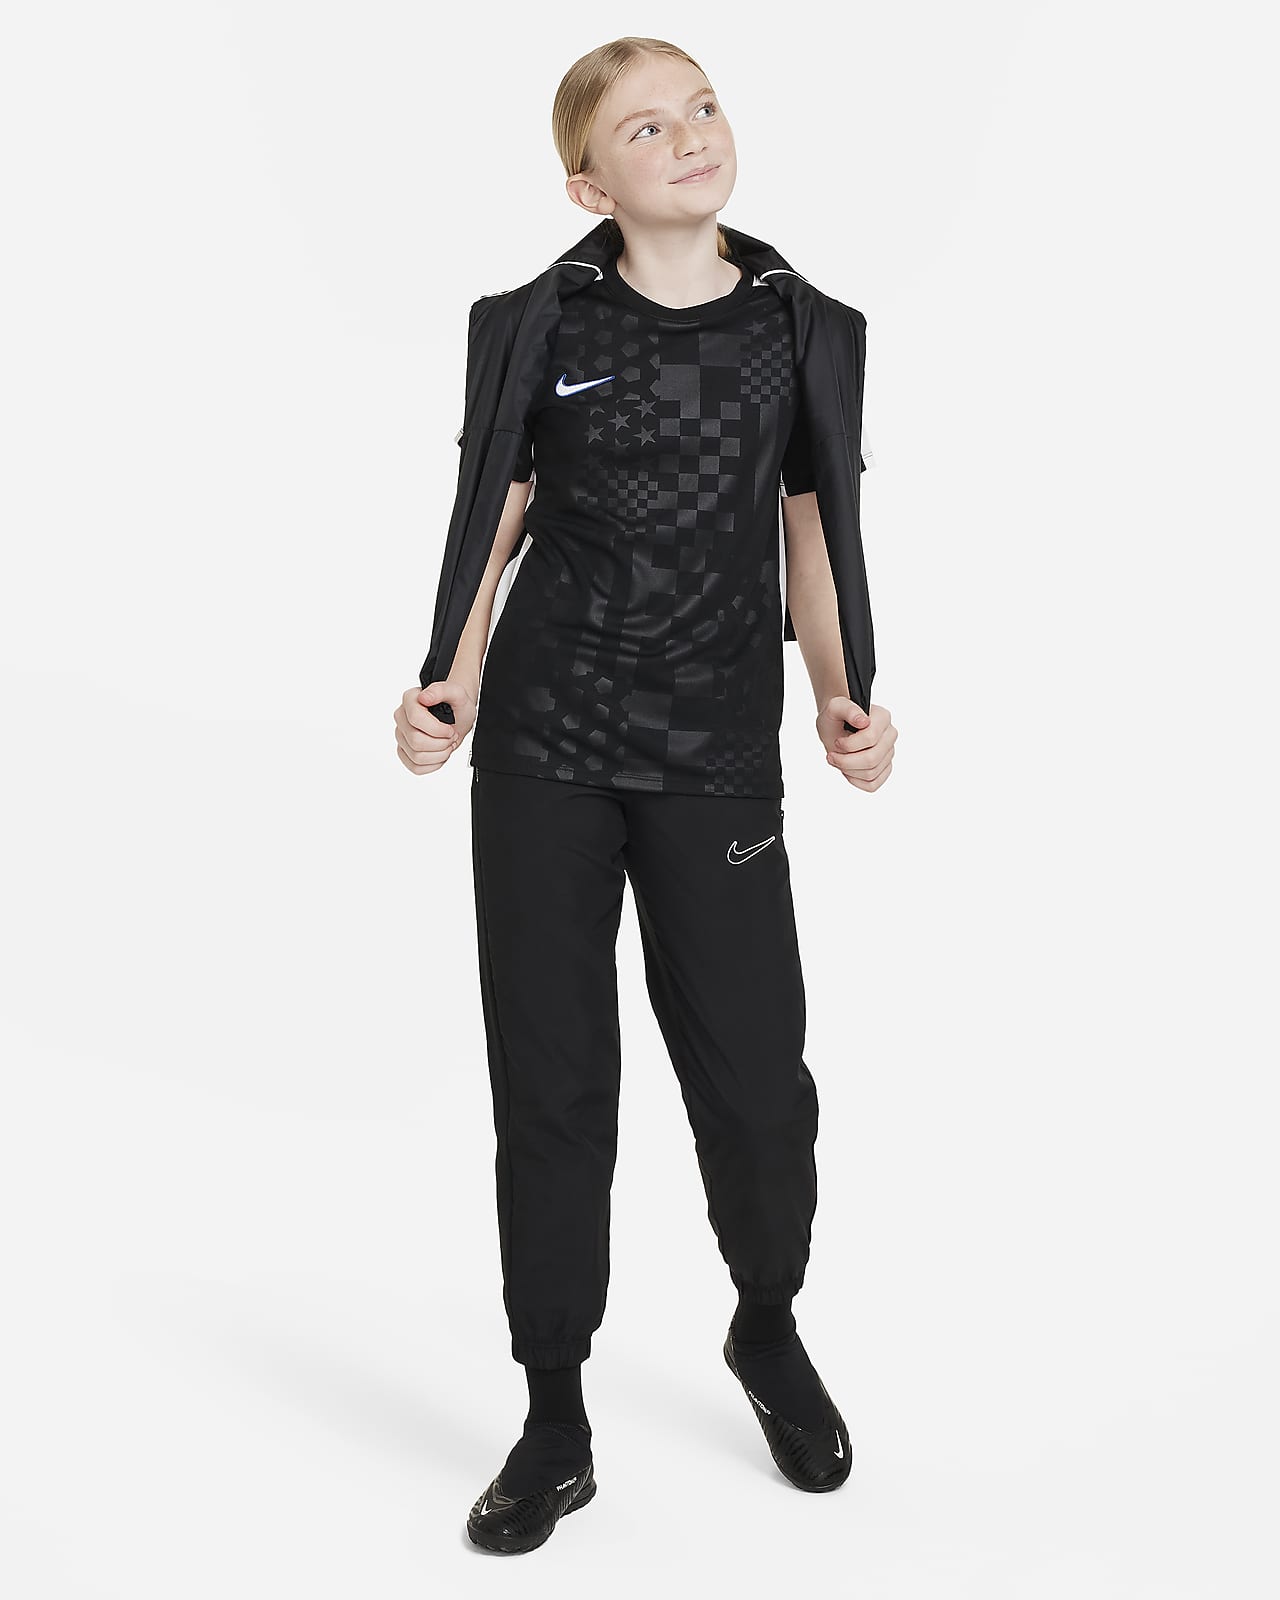 Kids\' Nike Short-Sleeve Big Soccer Dri-FIT Top. Academy